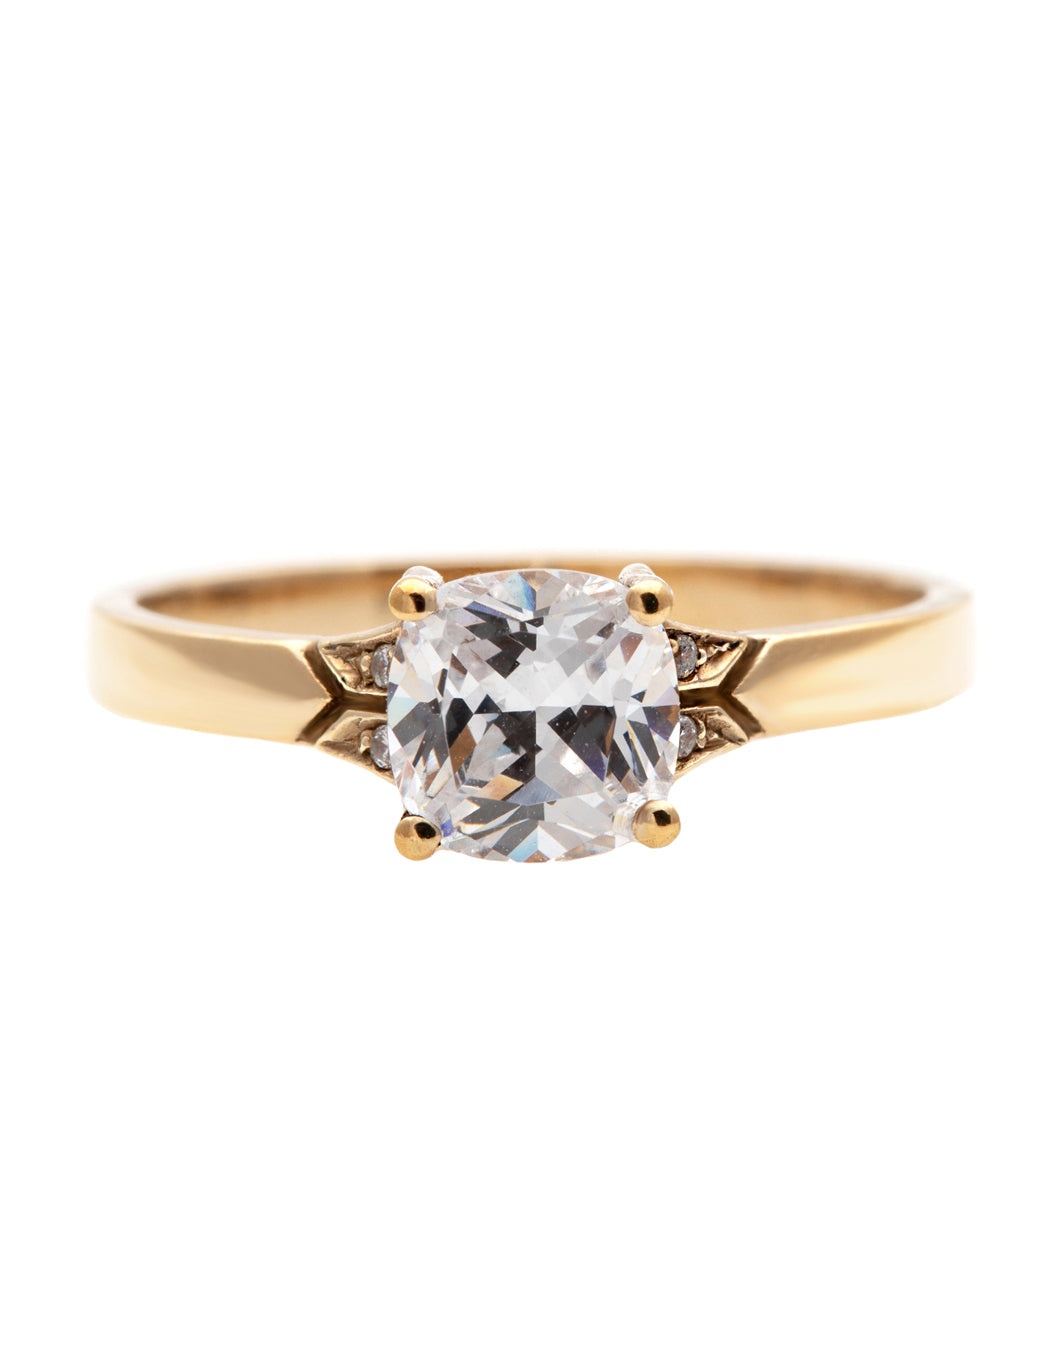 Merlin Diamond Ring with a Cushion Cut Diamond